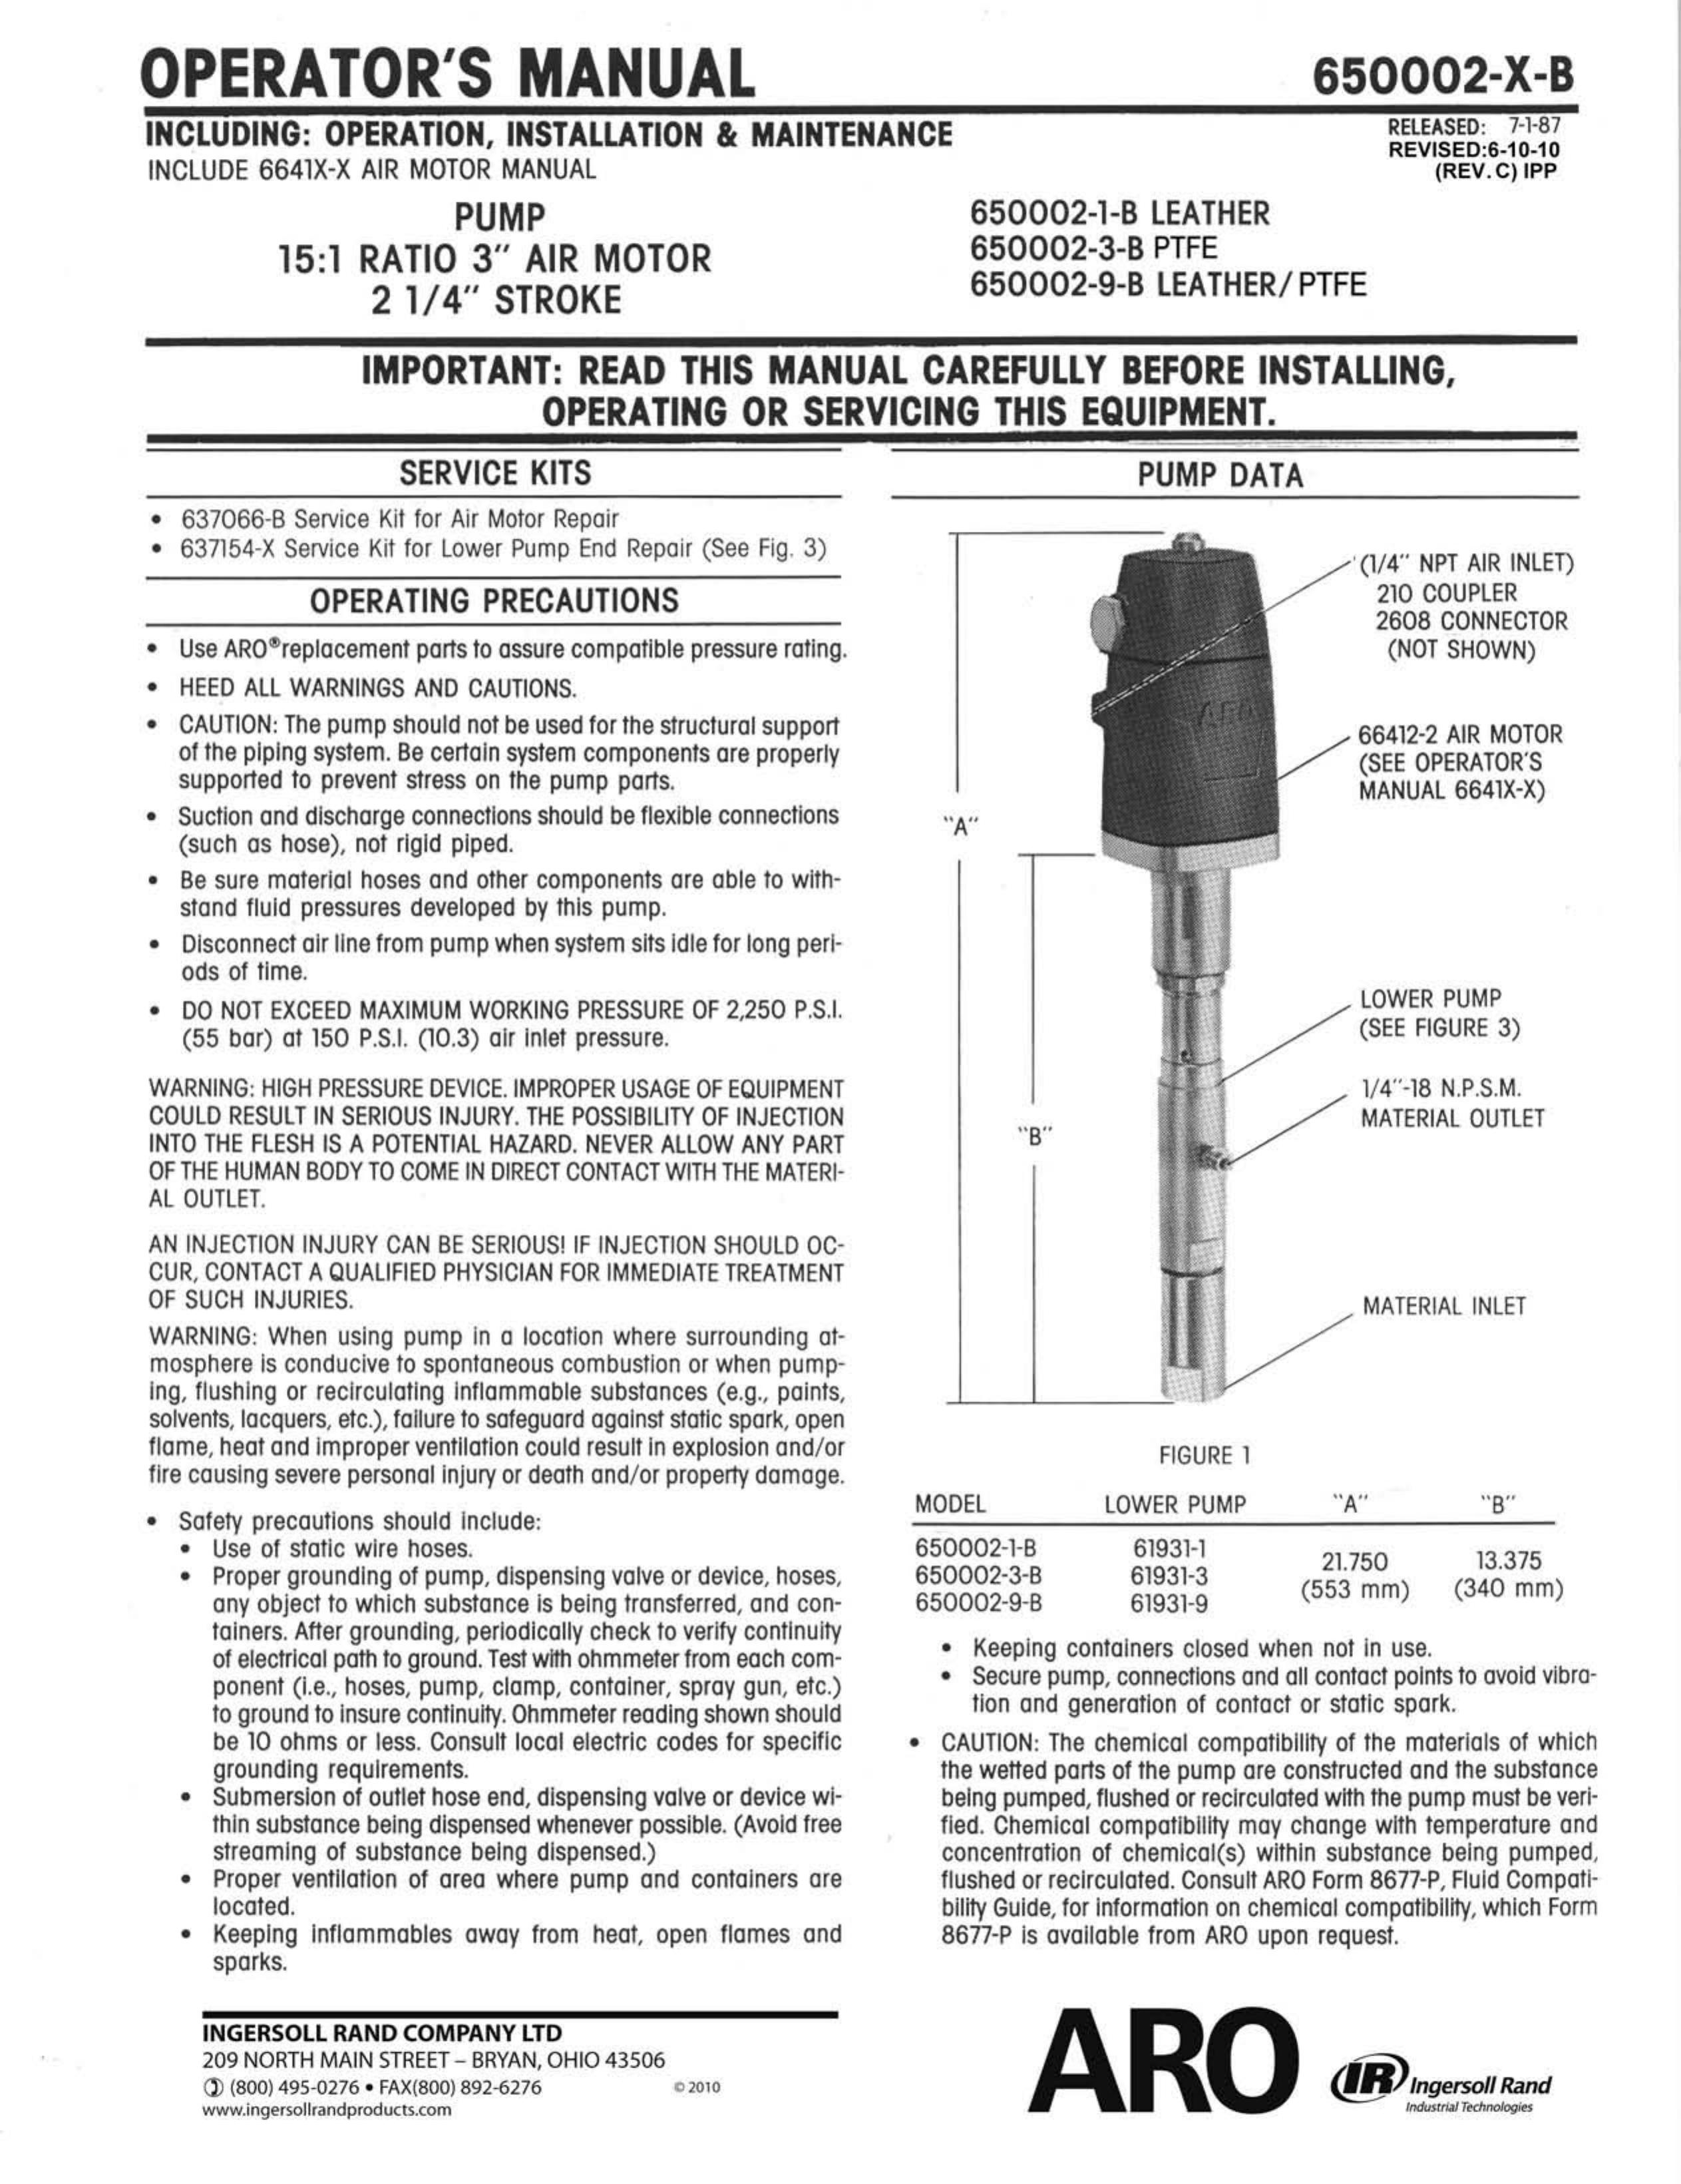 Ingersoll-Rand 650002-9-B Marine Sanitation System User Manual